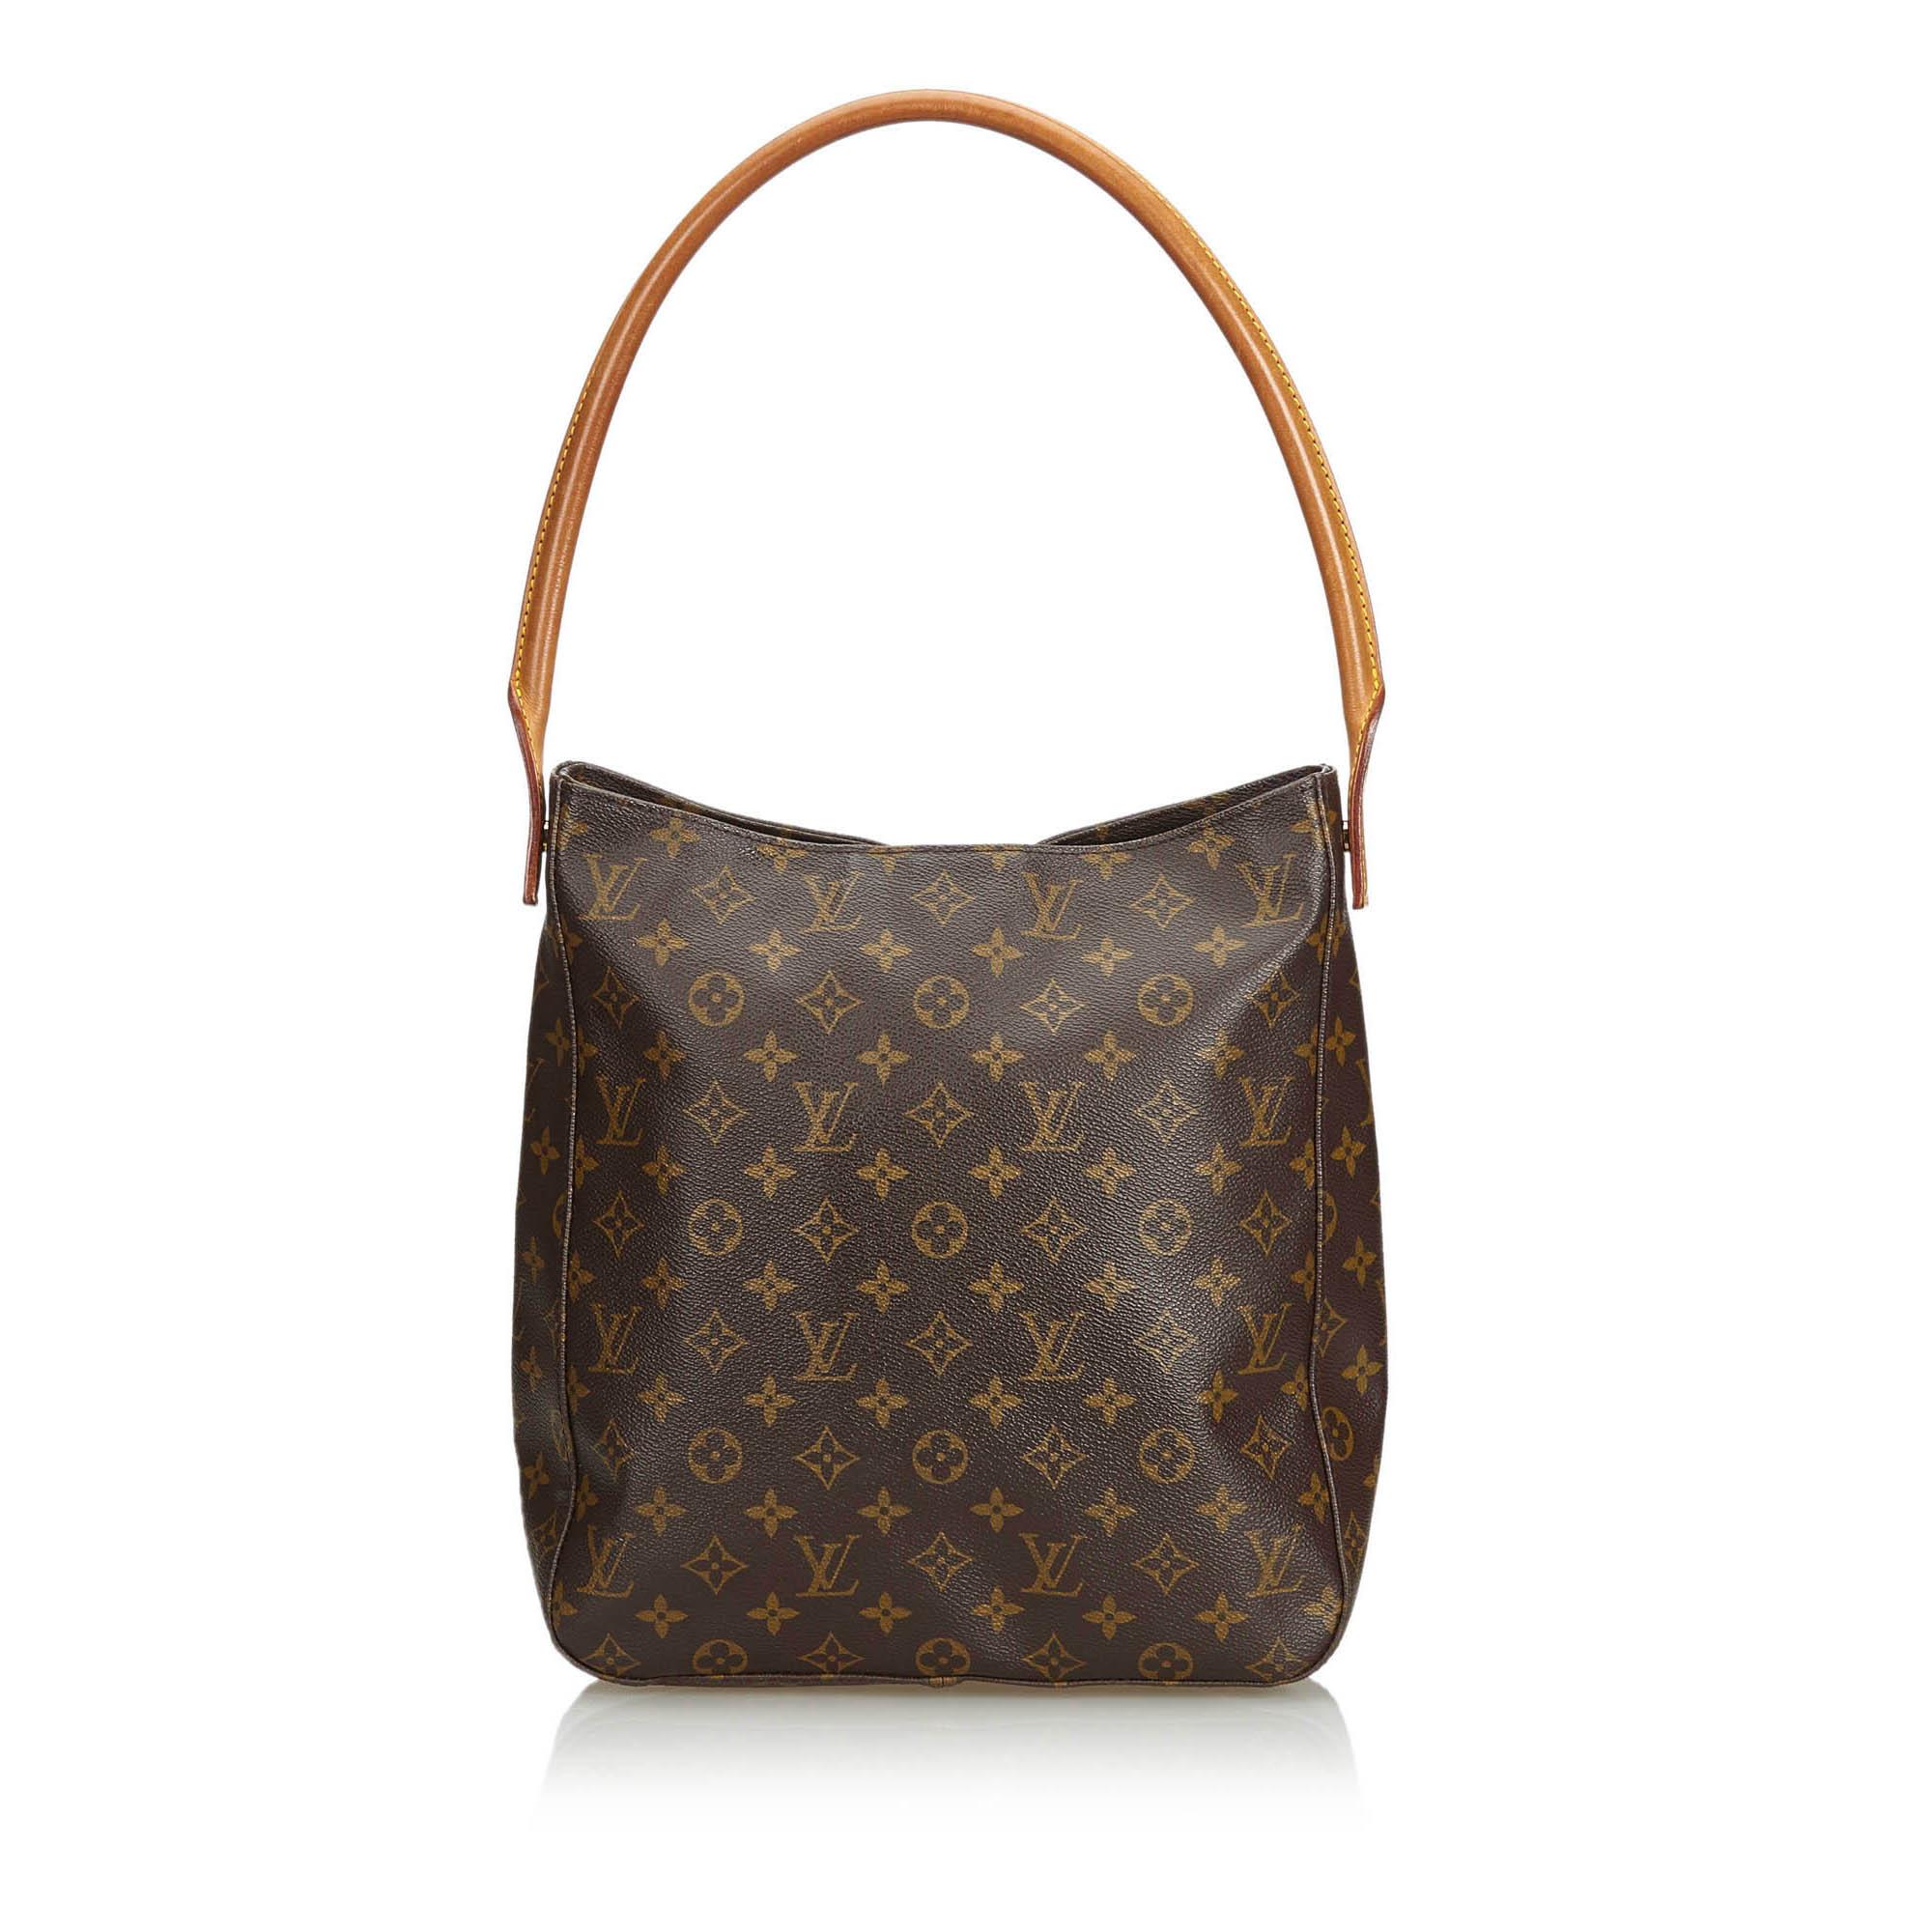 Lyst - Louis Vuitton Monogram Canvas Looping Gm Tote Bag in Brown